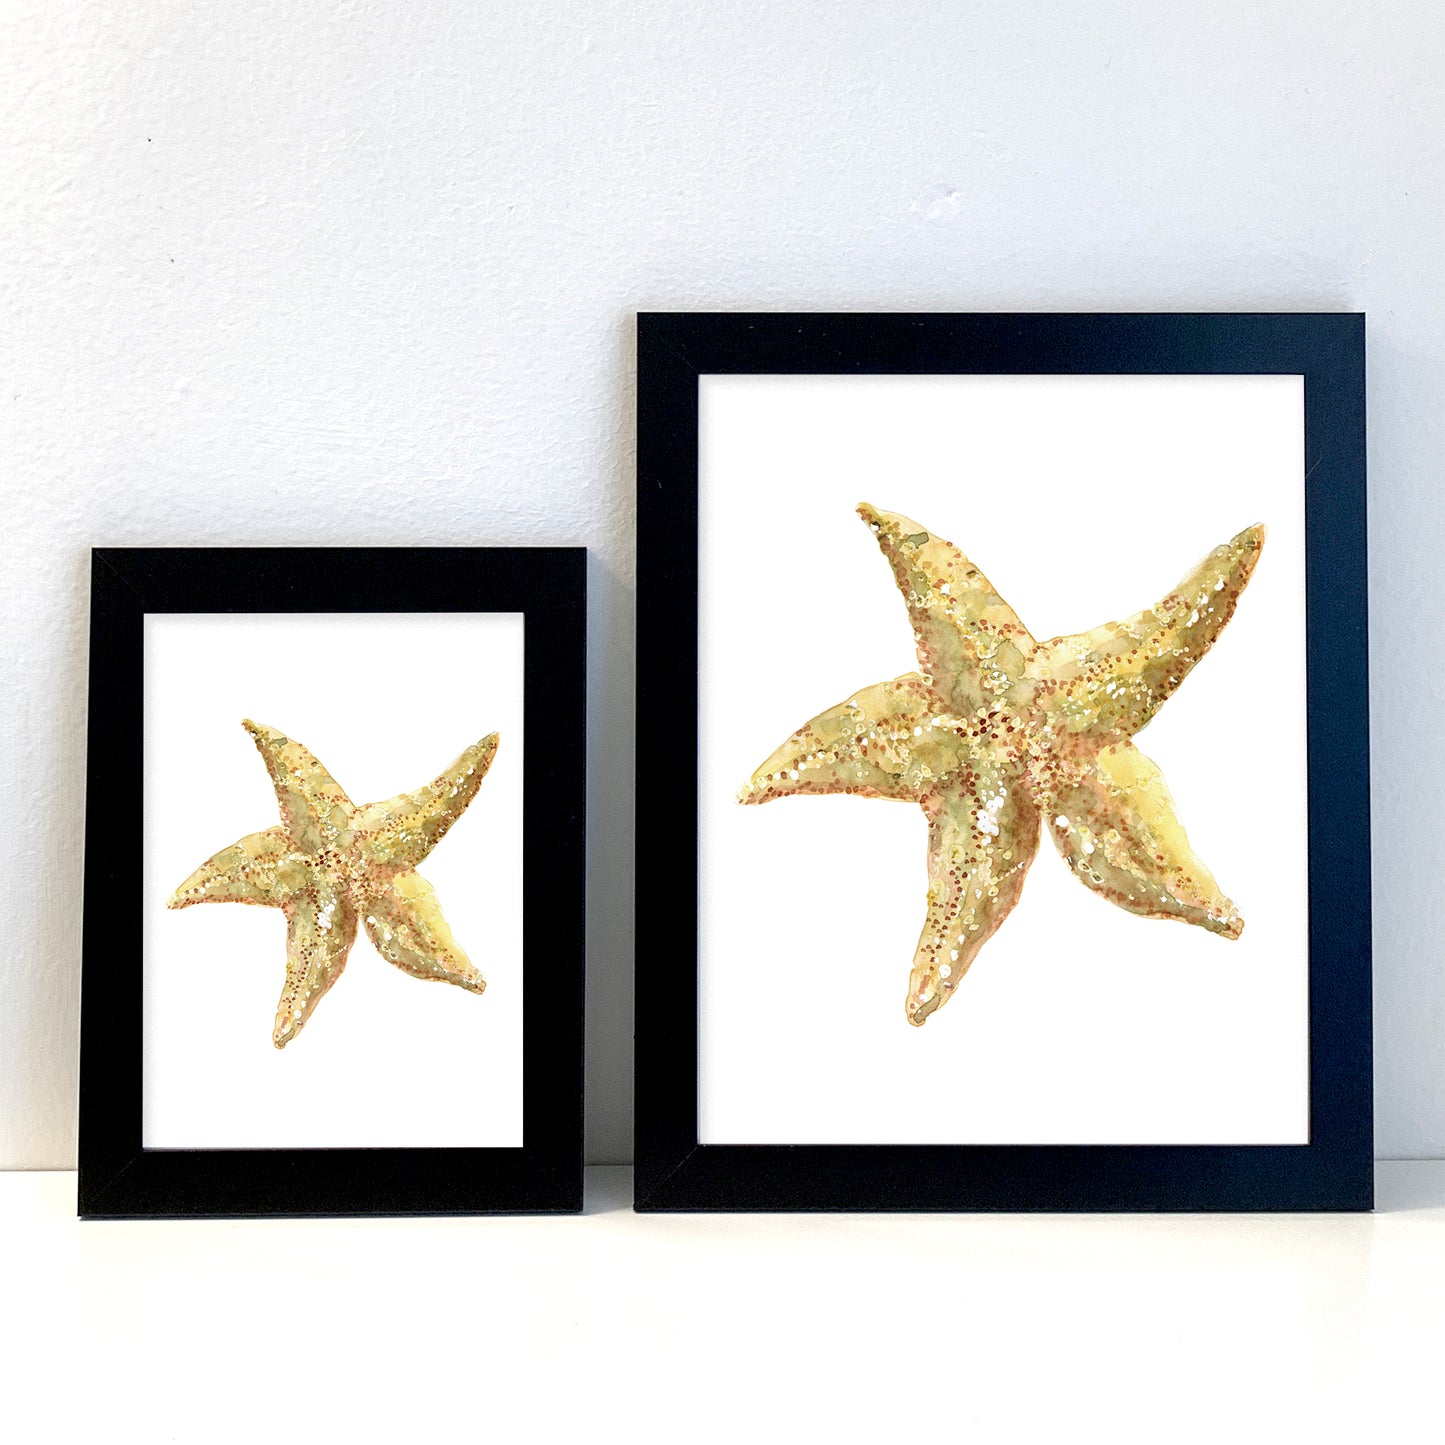 Starfish Watercolor Art Prints - Flamingo Shores - Original Art for Home Decor and Gifts